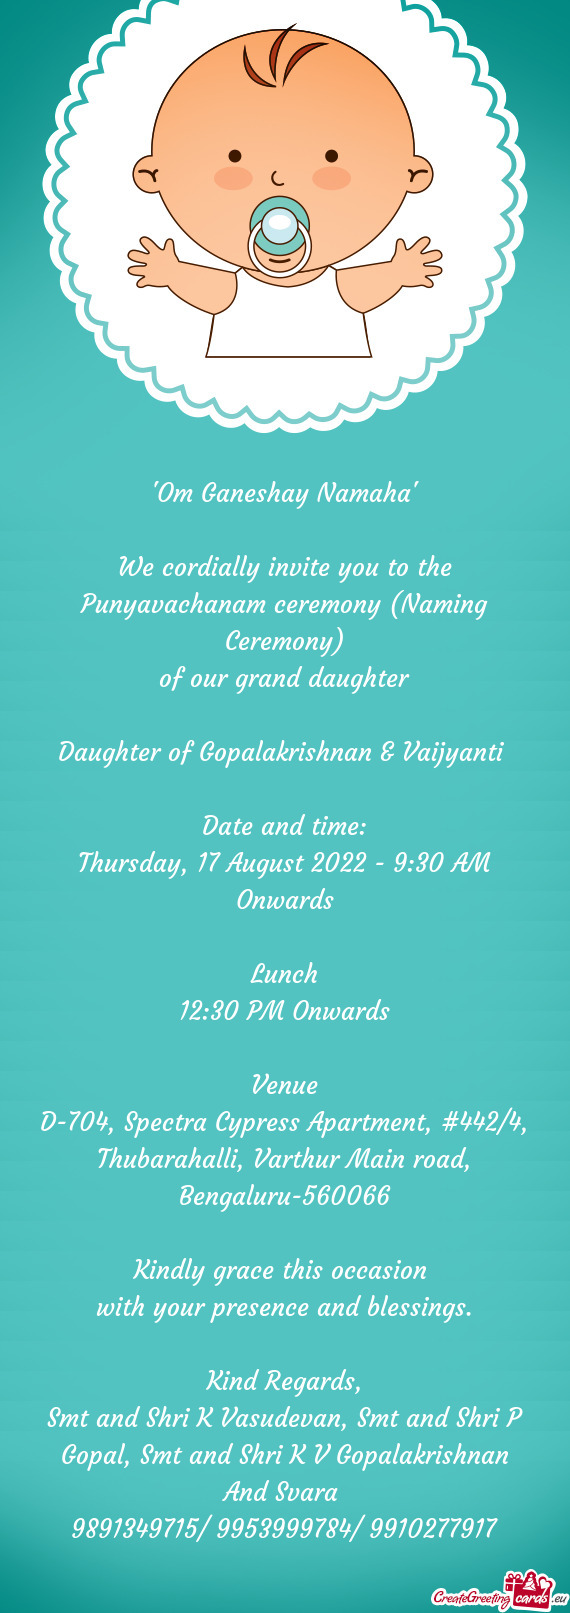 We cordially invite you to the Punyavachanam ceremony (Naming Ceremony)